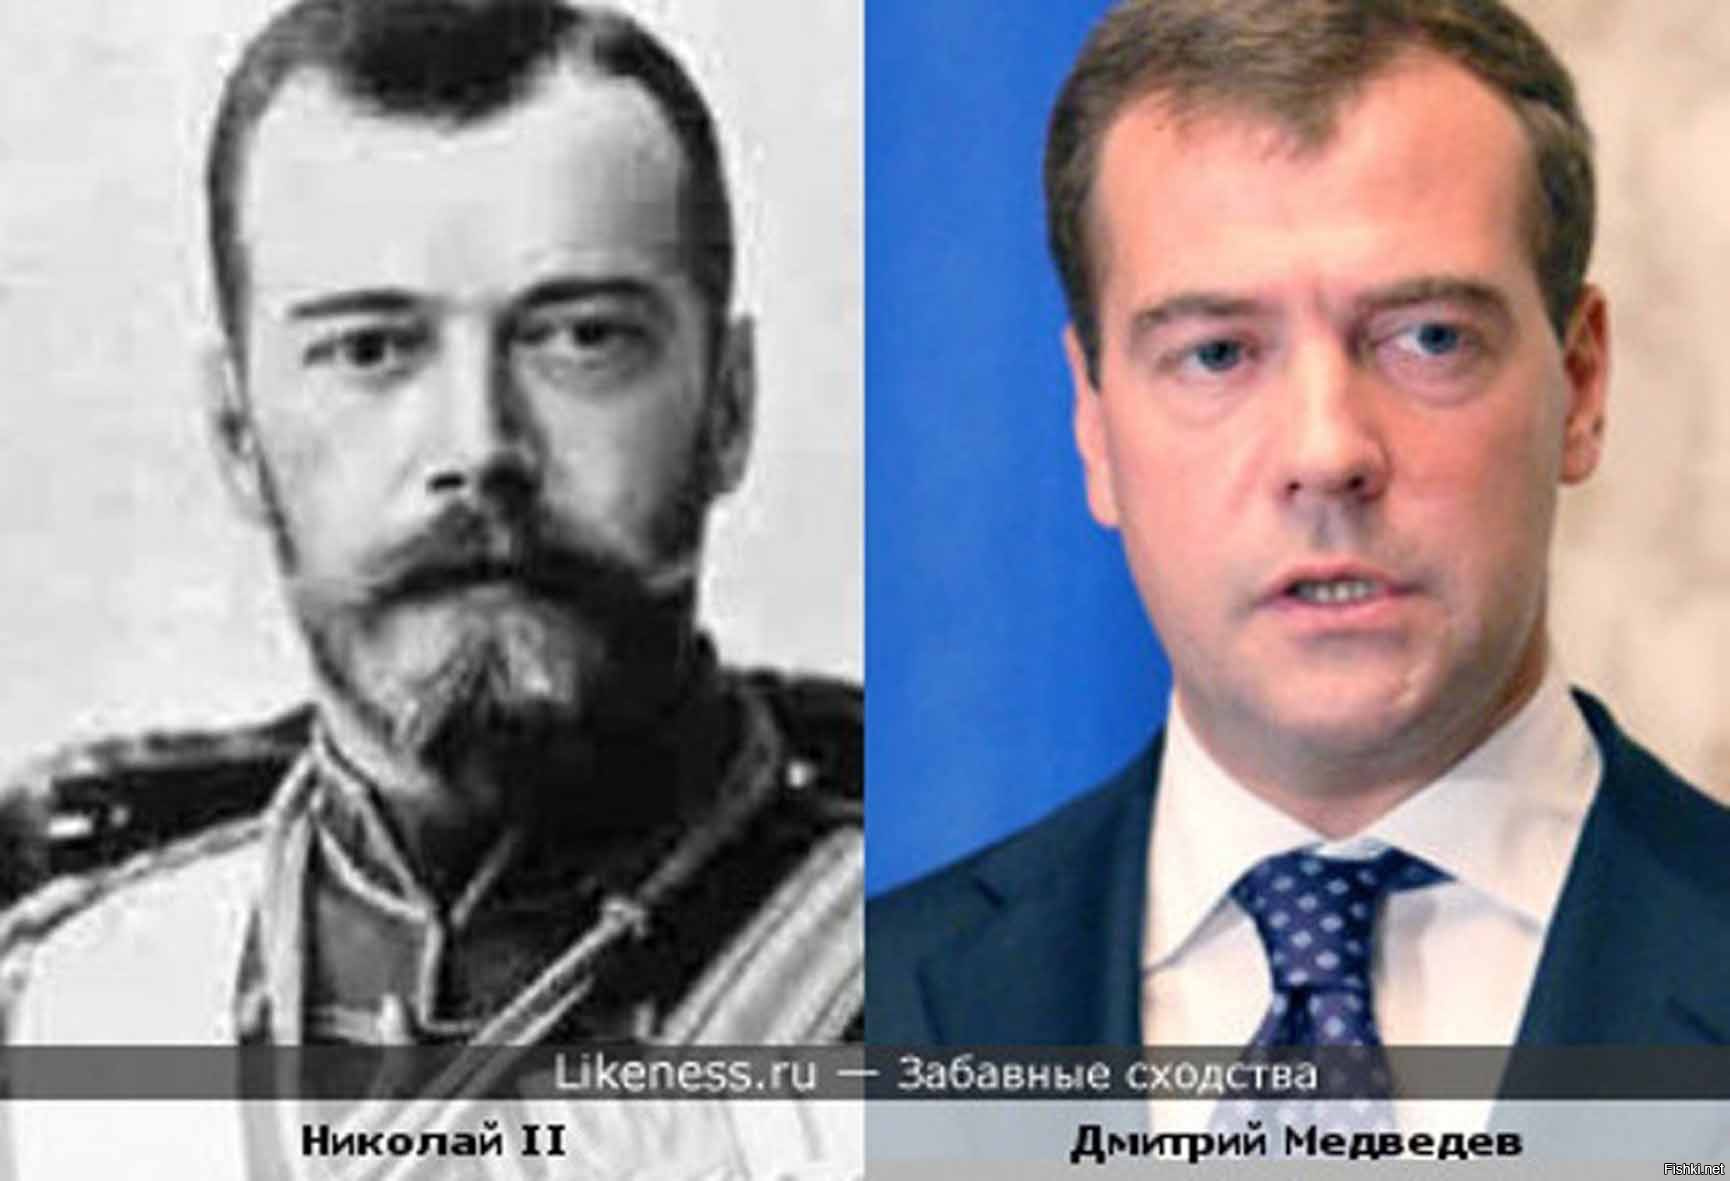 Дмитрий Медведев и Николай 2 сходство